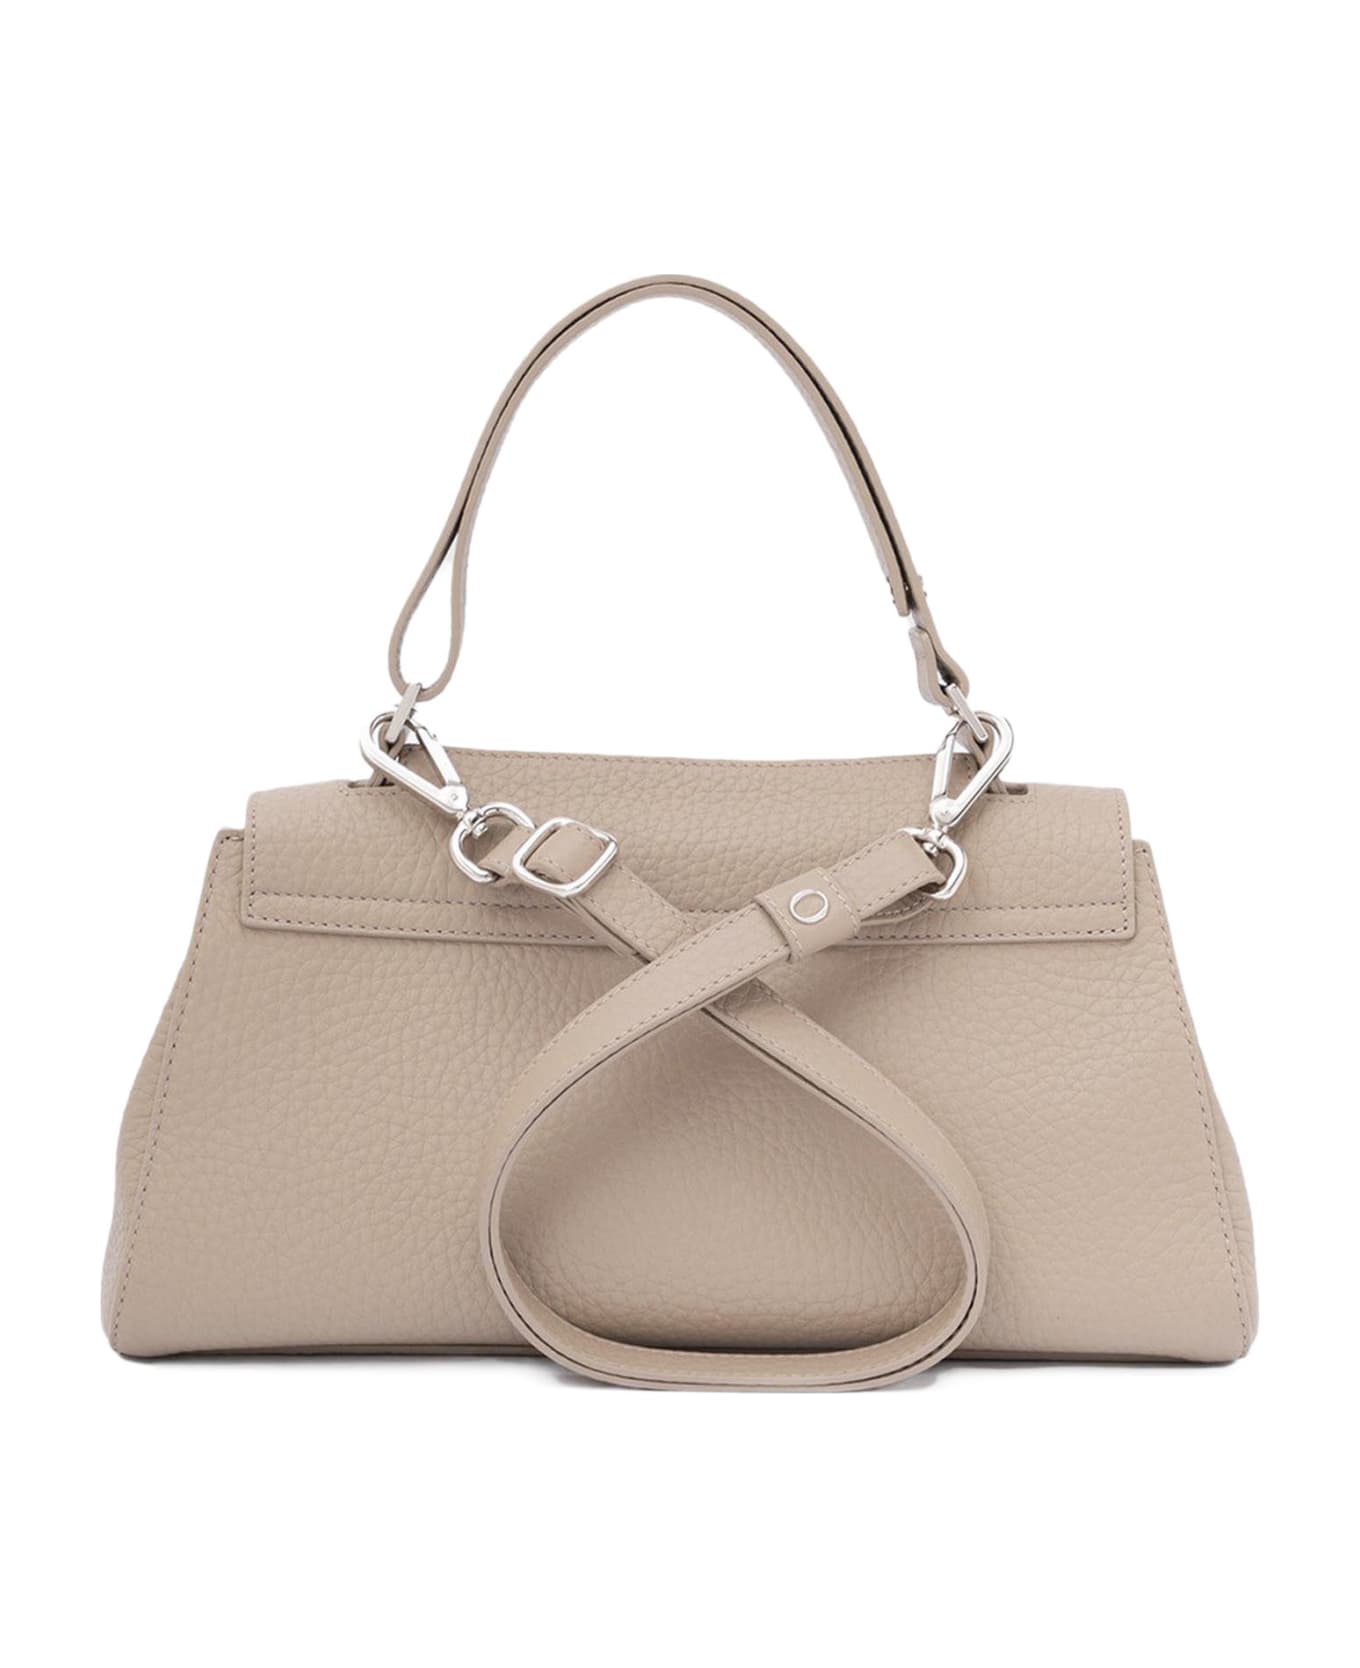 Orciani Sveva Longuette Soft Leather Handbag - Beige